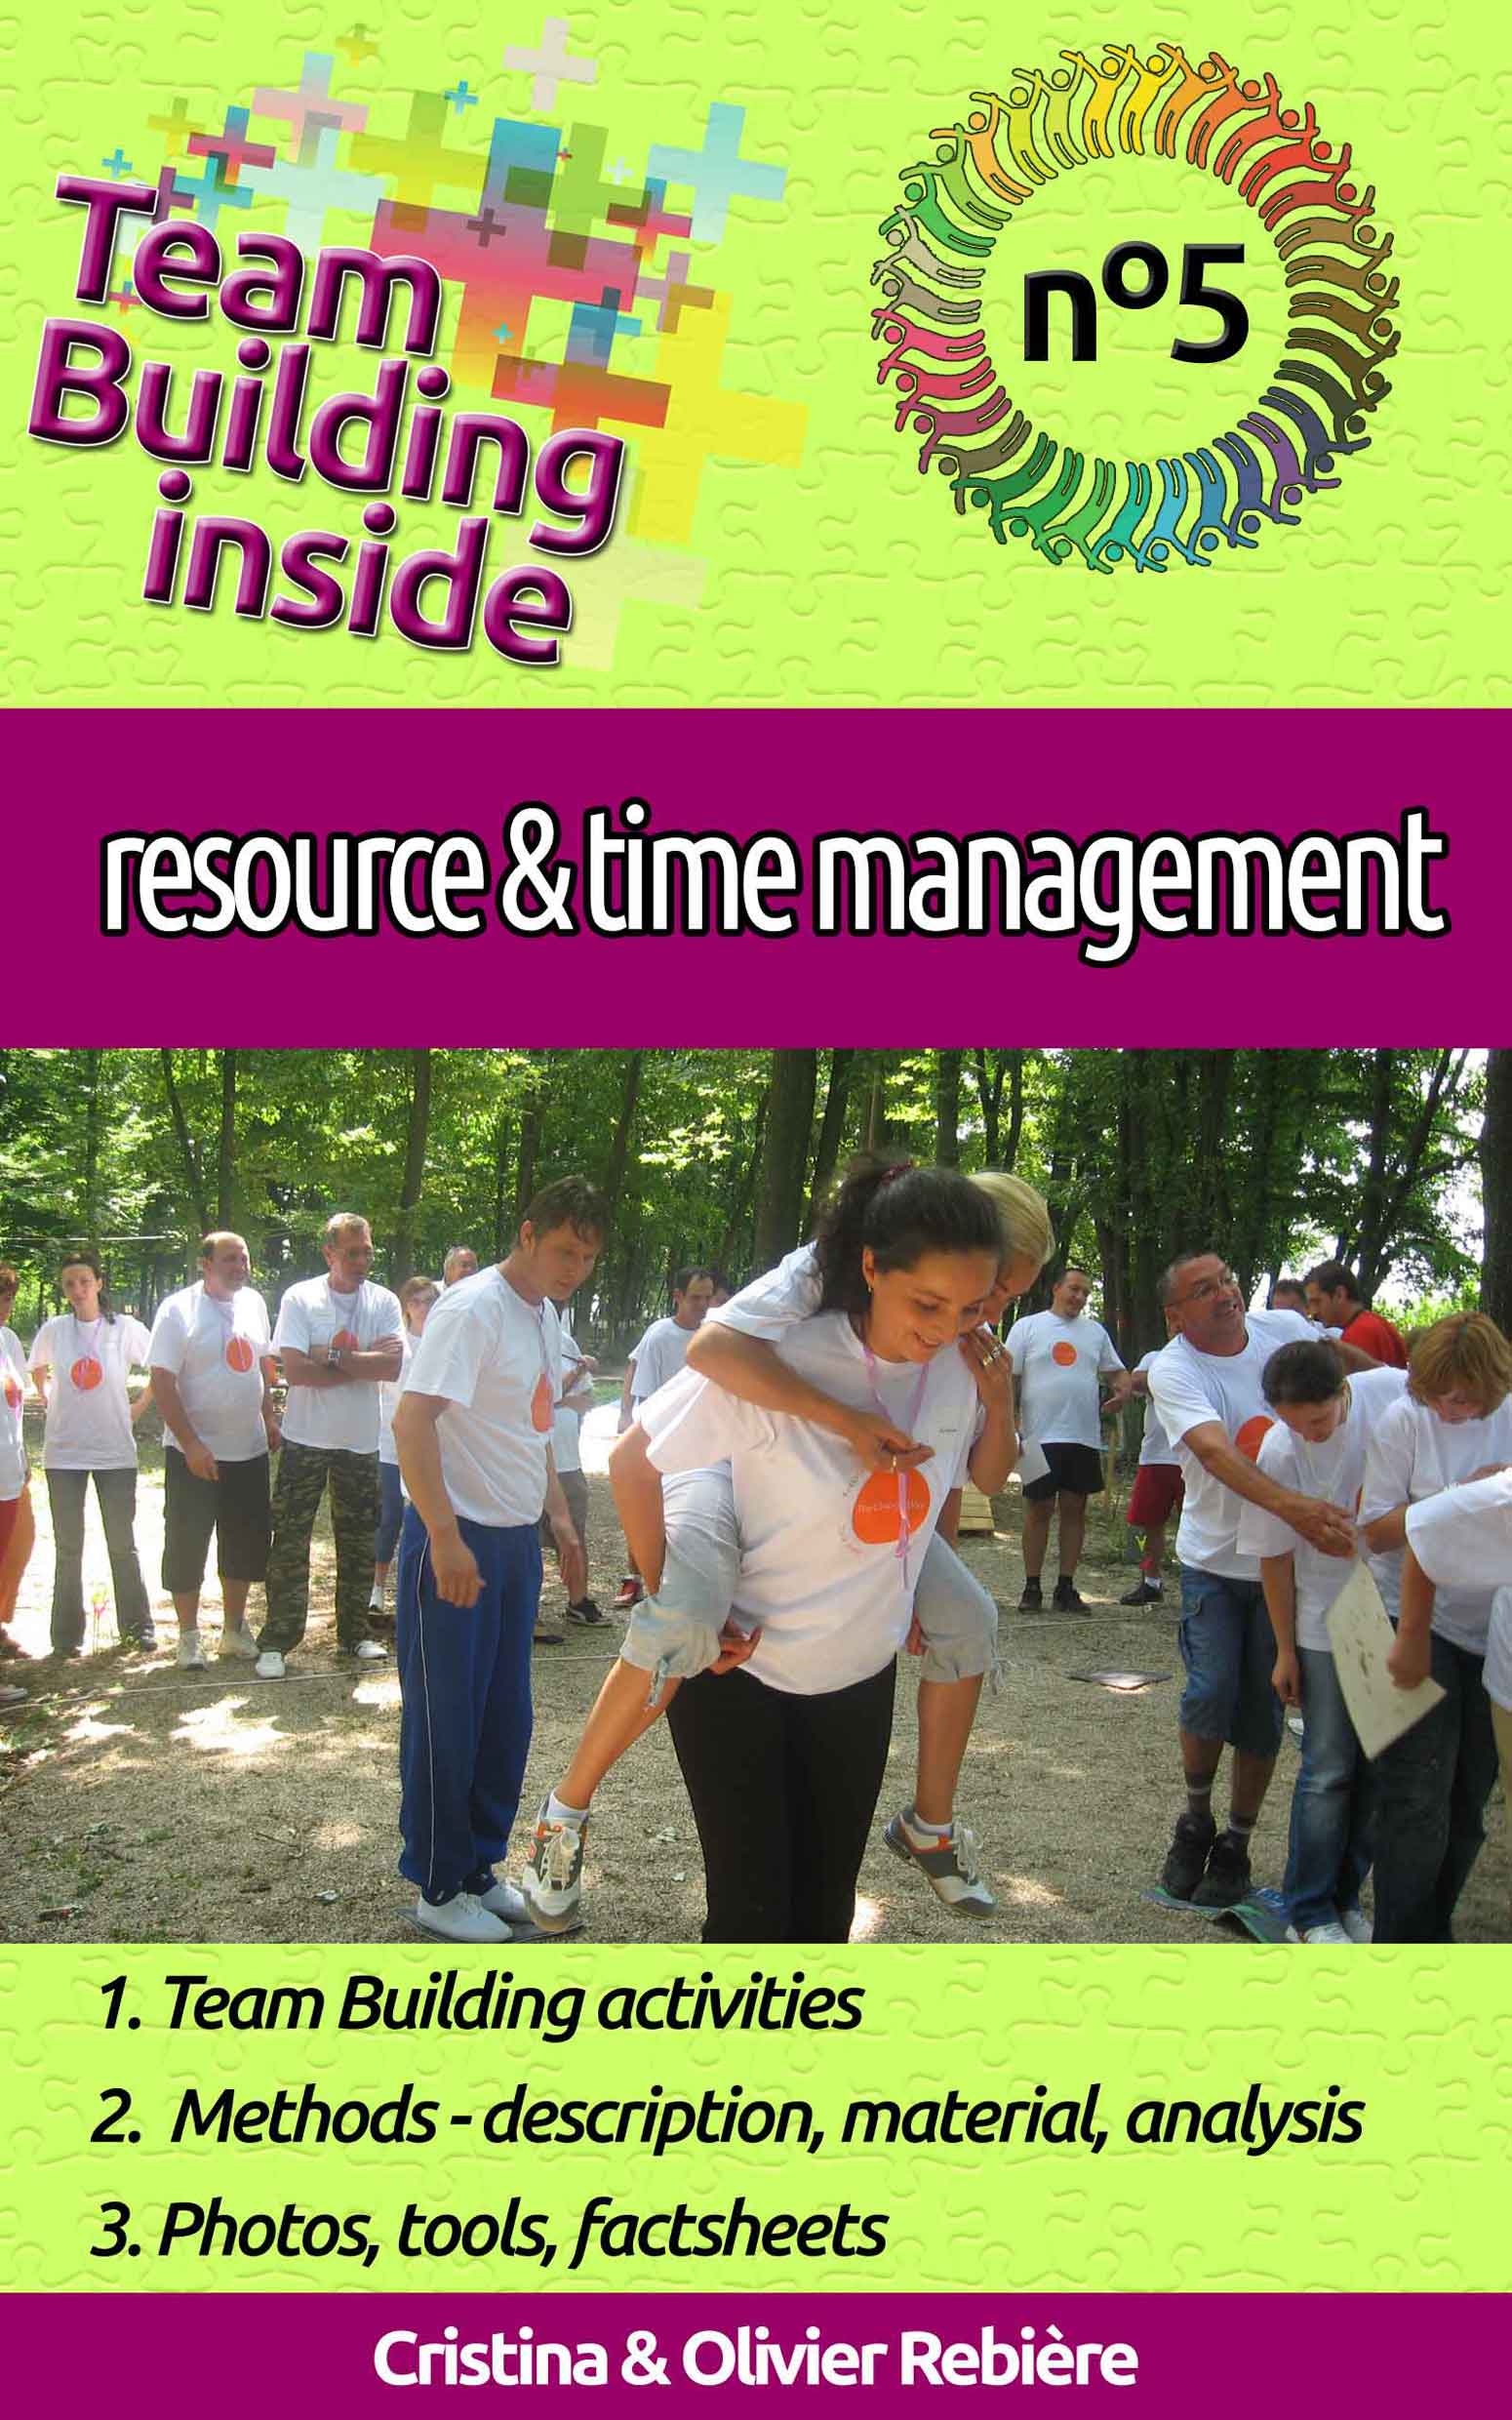 Team Building inside #5 - resource & time management - Cristina Rebiere & Olivier Rebiere